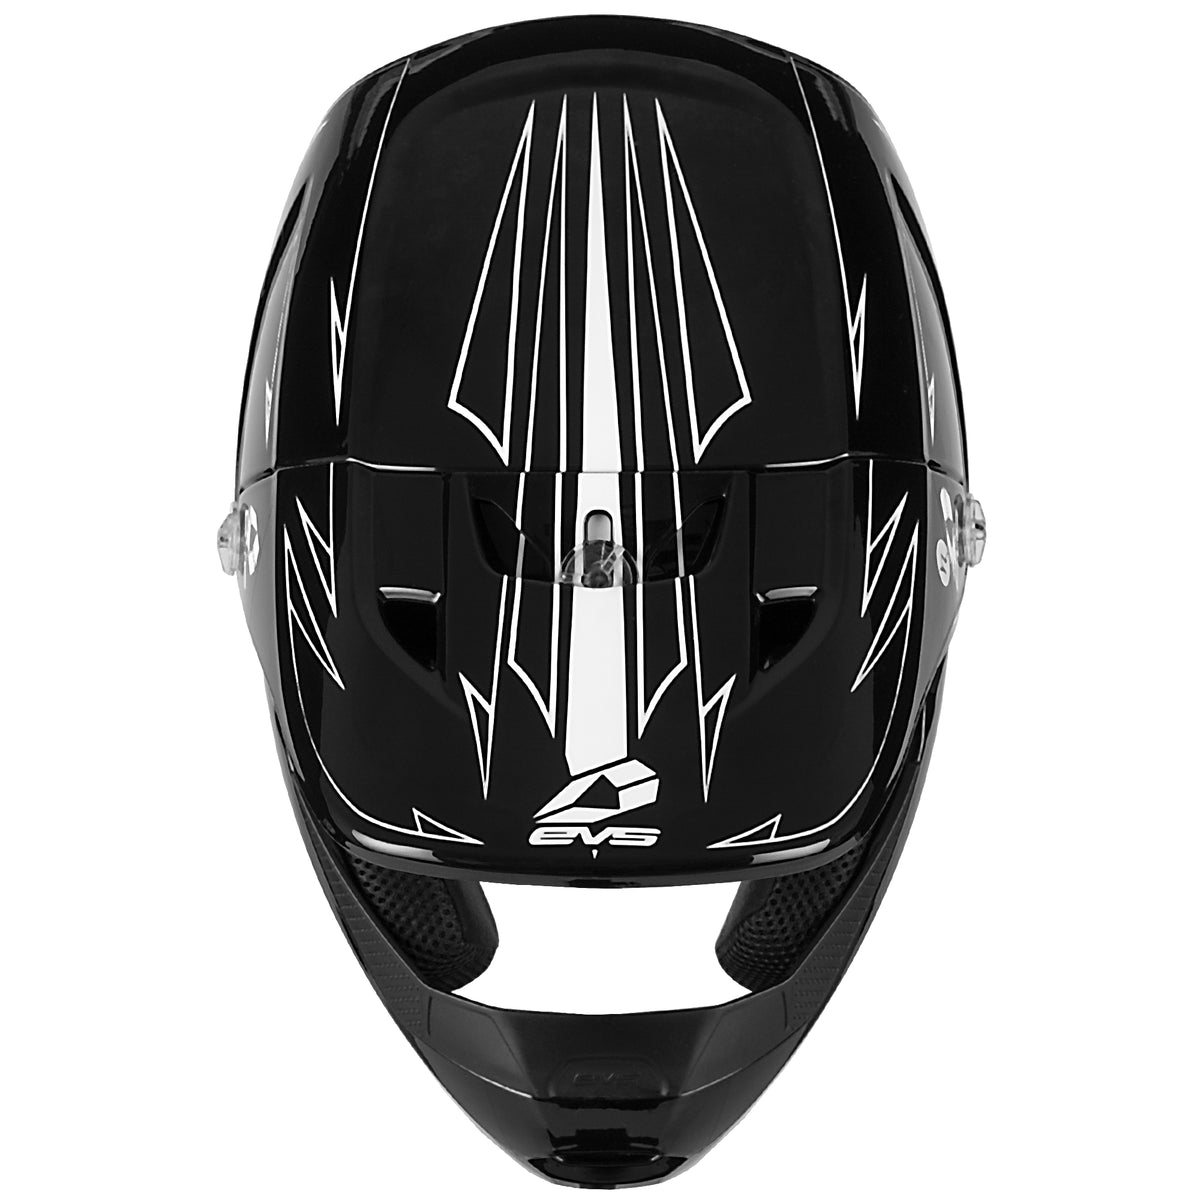 T3 Youth Helmet - 50/Fifty Black - EVS Sports